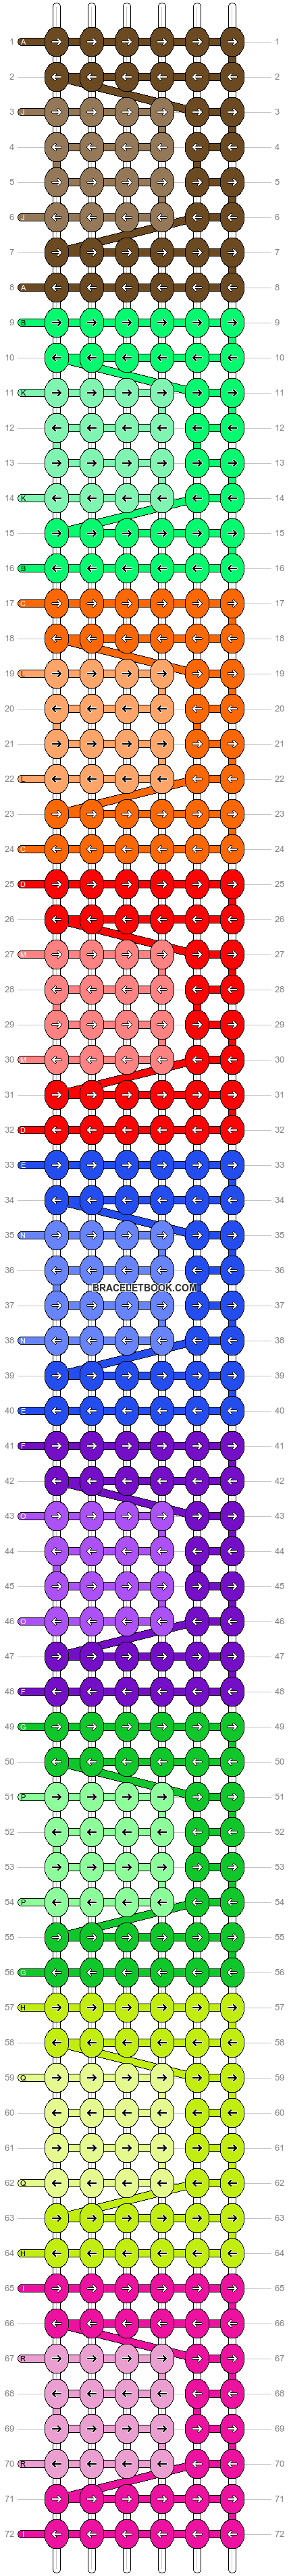 Alpha pattern #8358 pattern